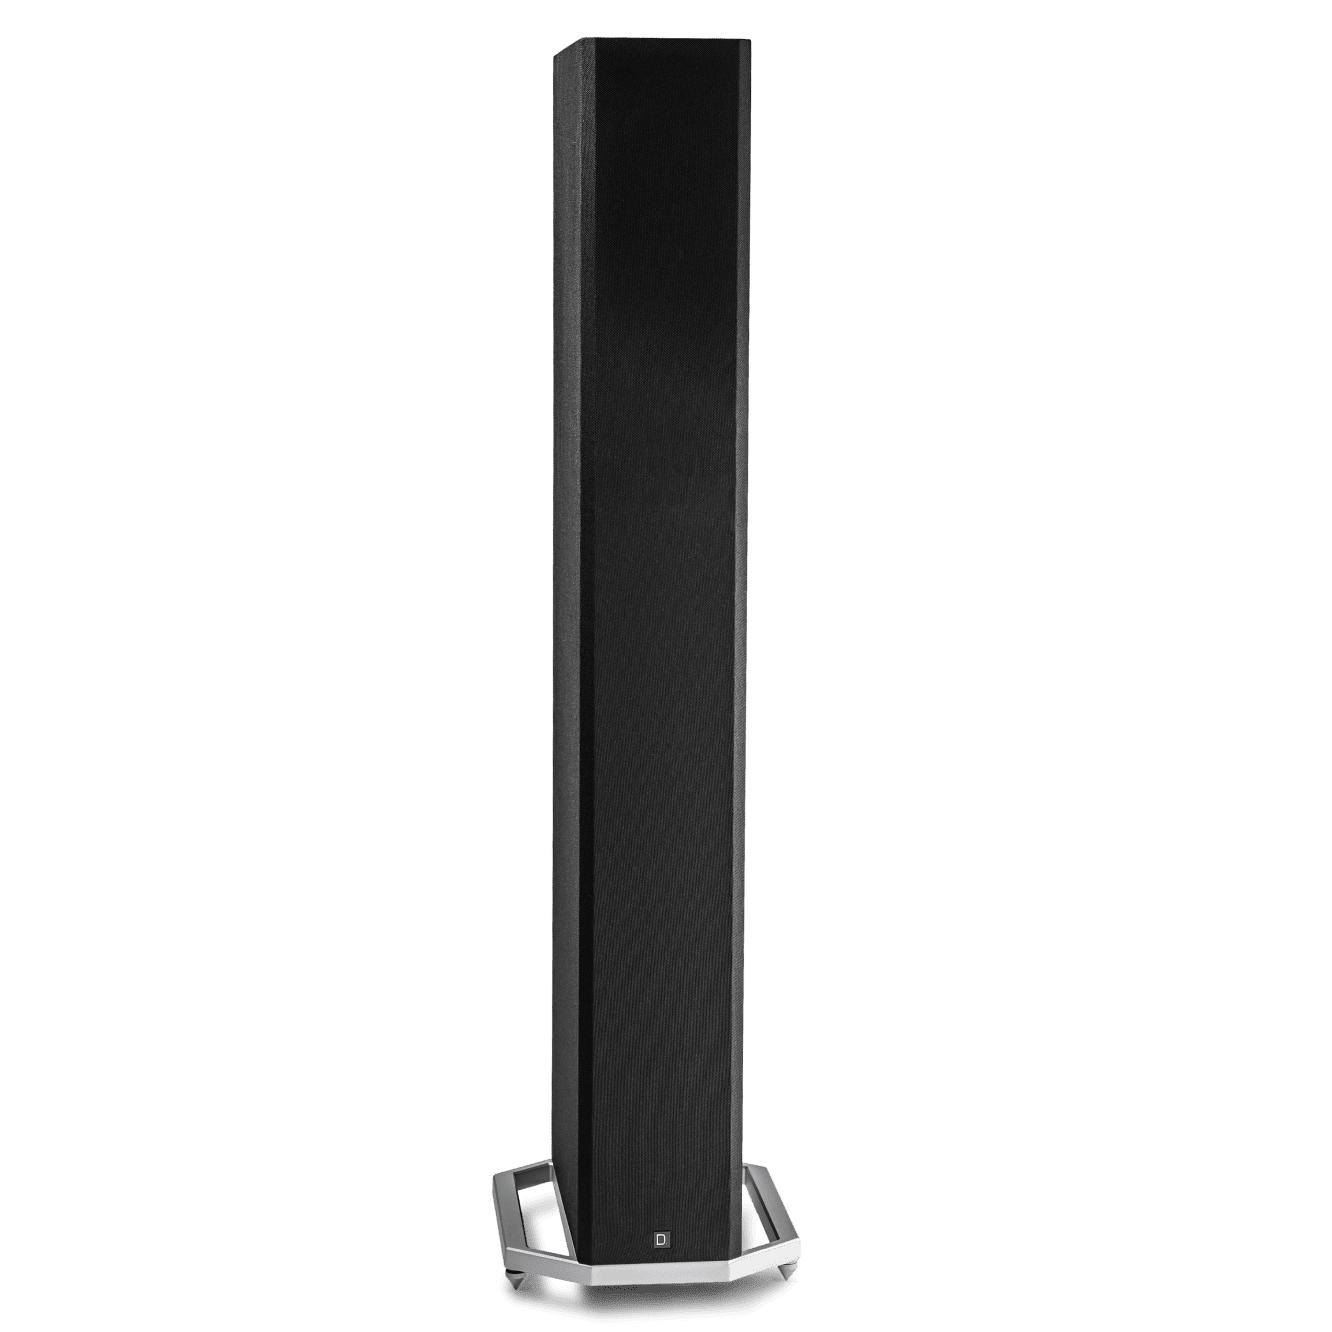 Definitive Technology BP9060 Bipolar Tower Speakers (Pair)